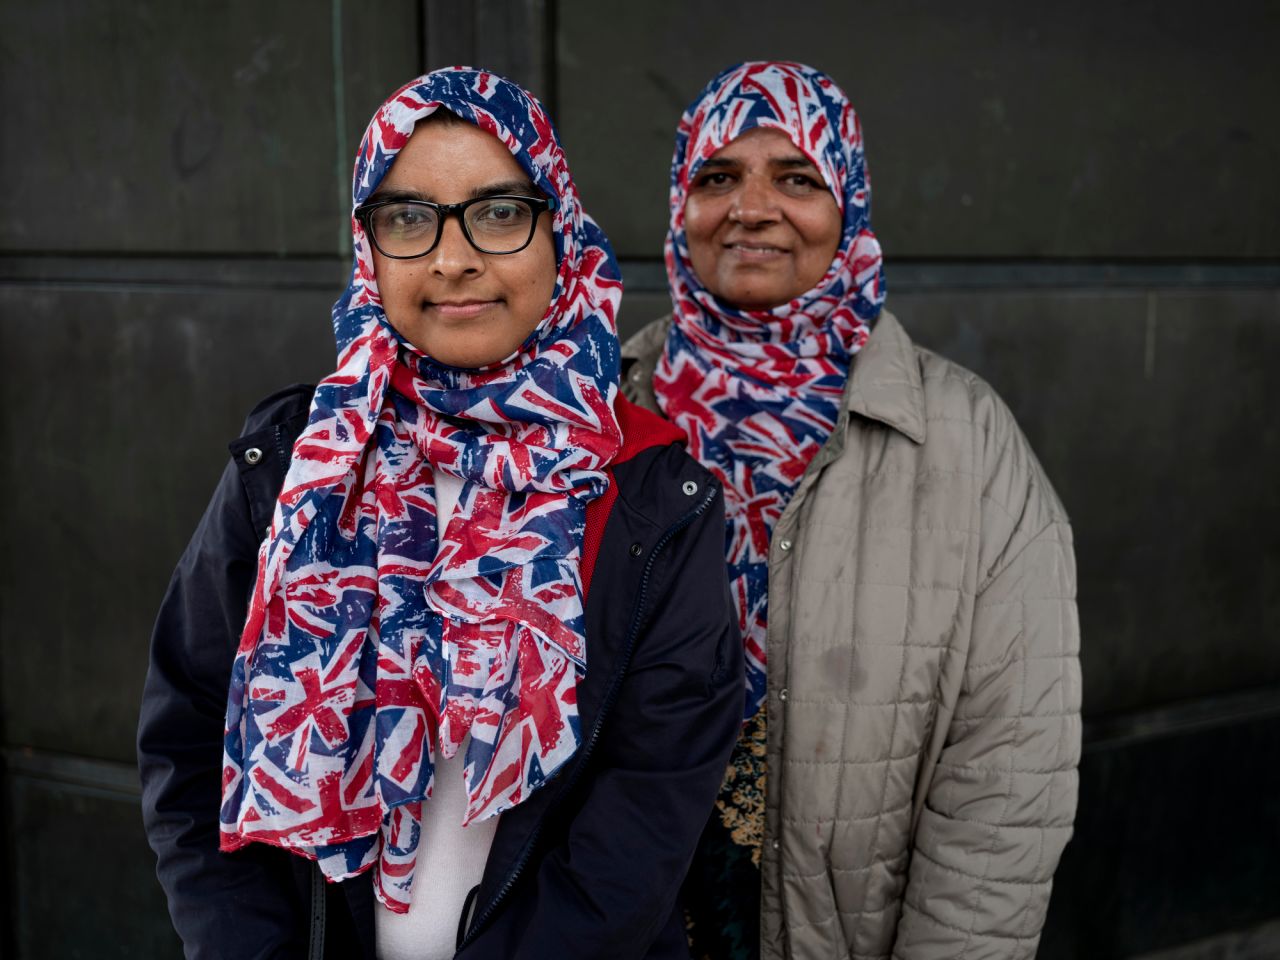 Farkhanda Ahmed 和她的母親 Shakeela 來自英國伯克郡的一個小鎮 Slough。 